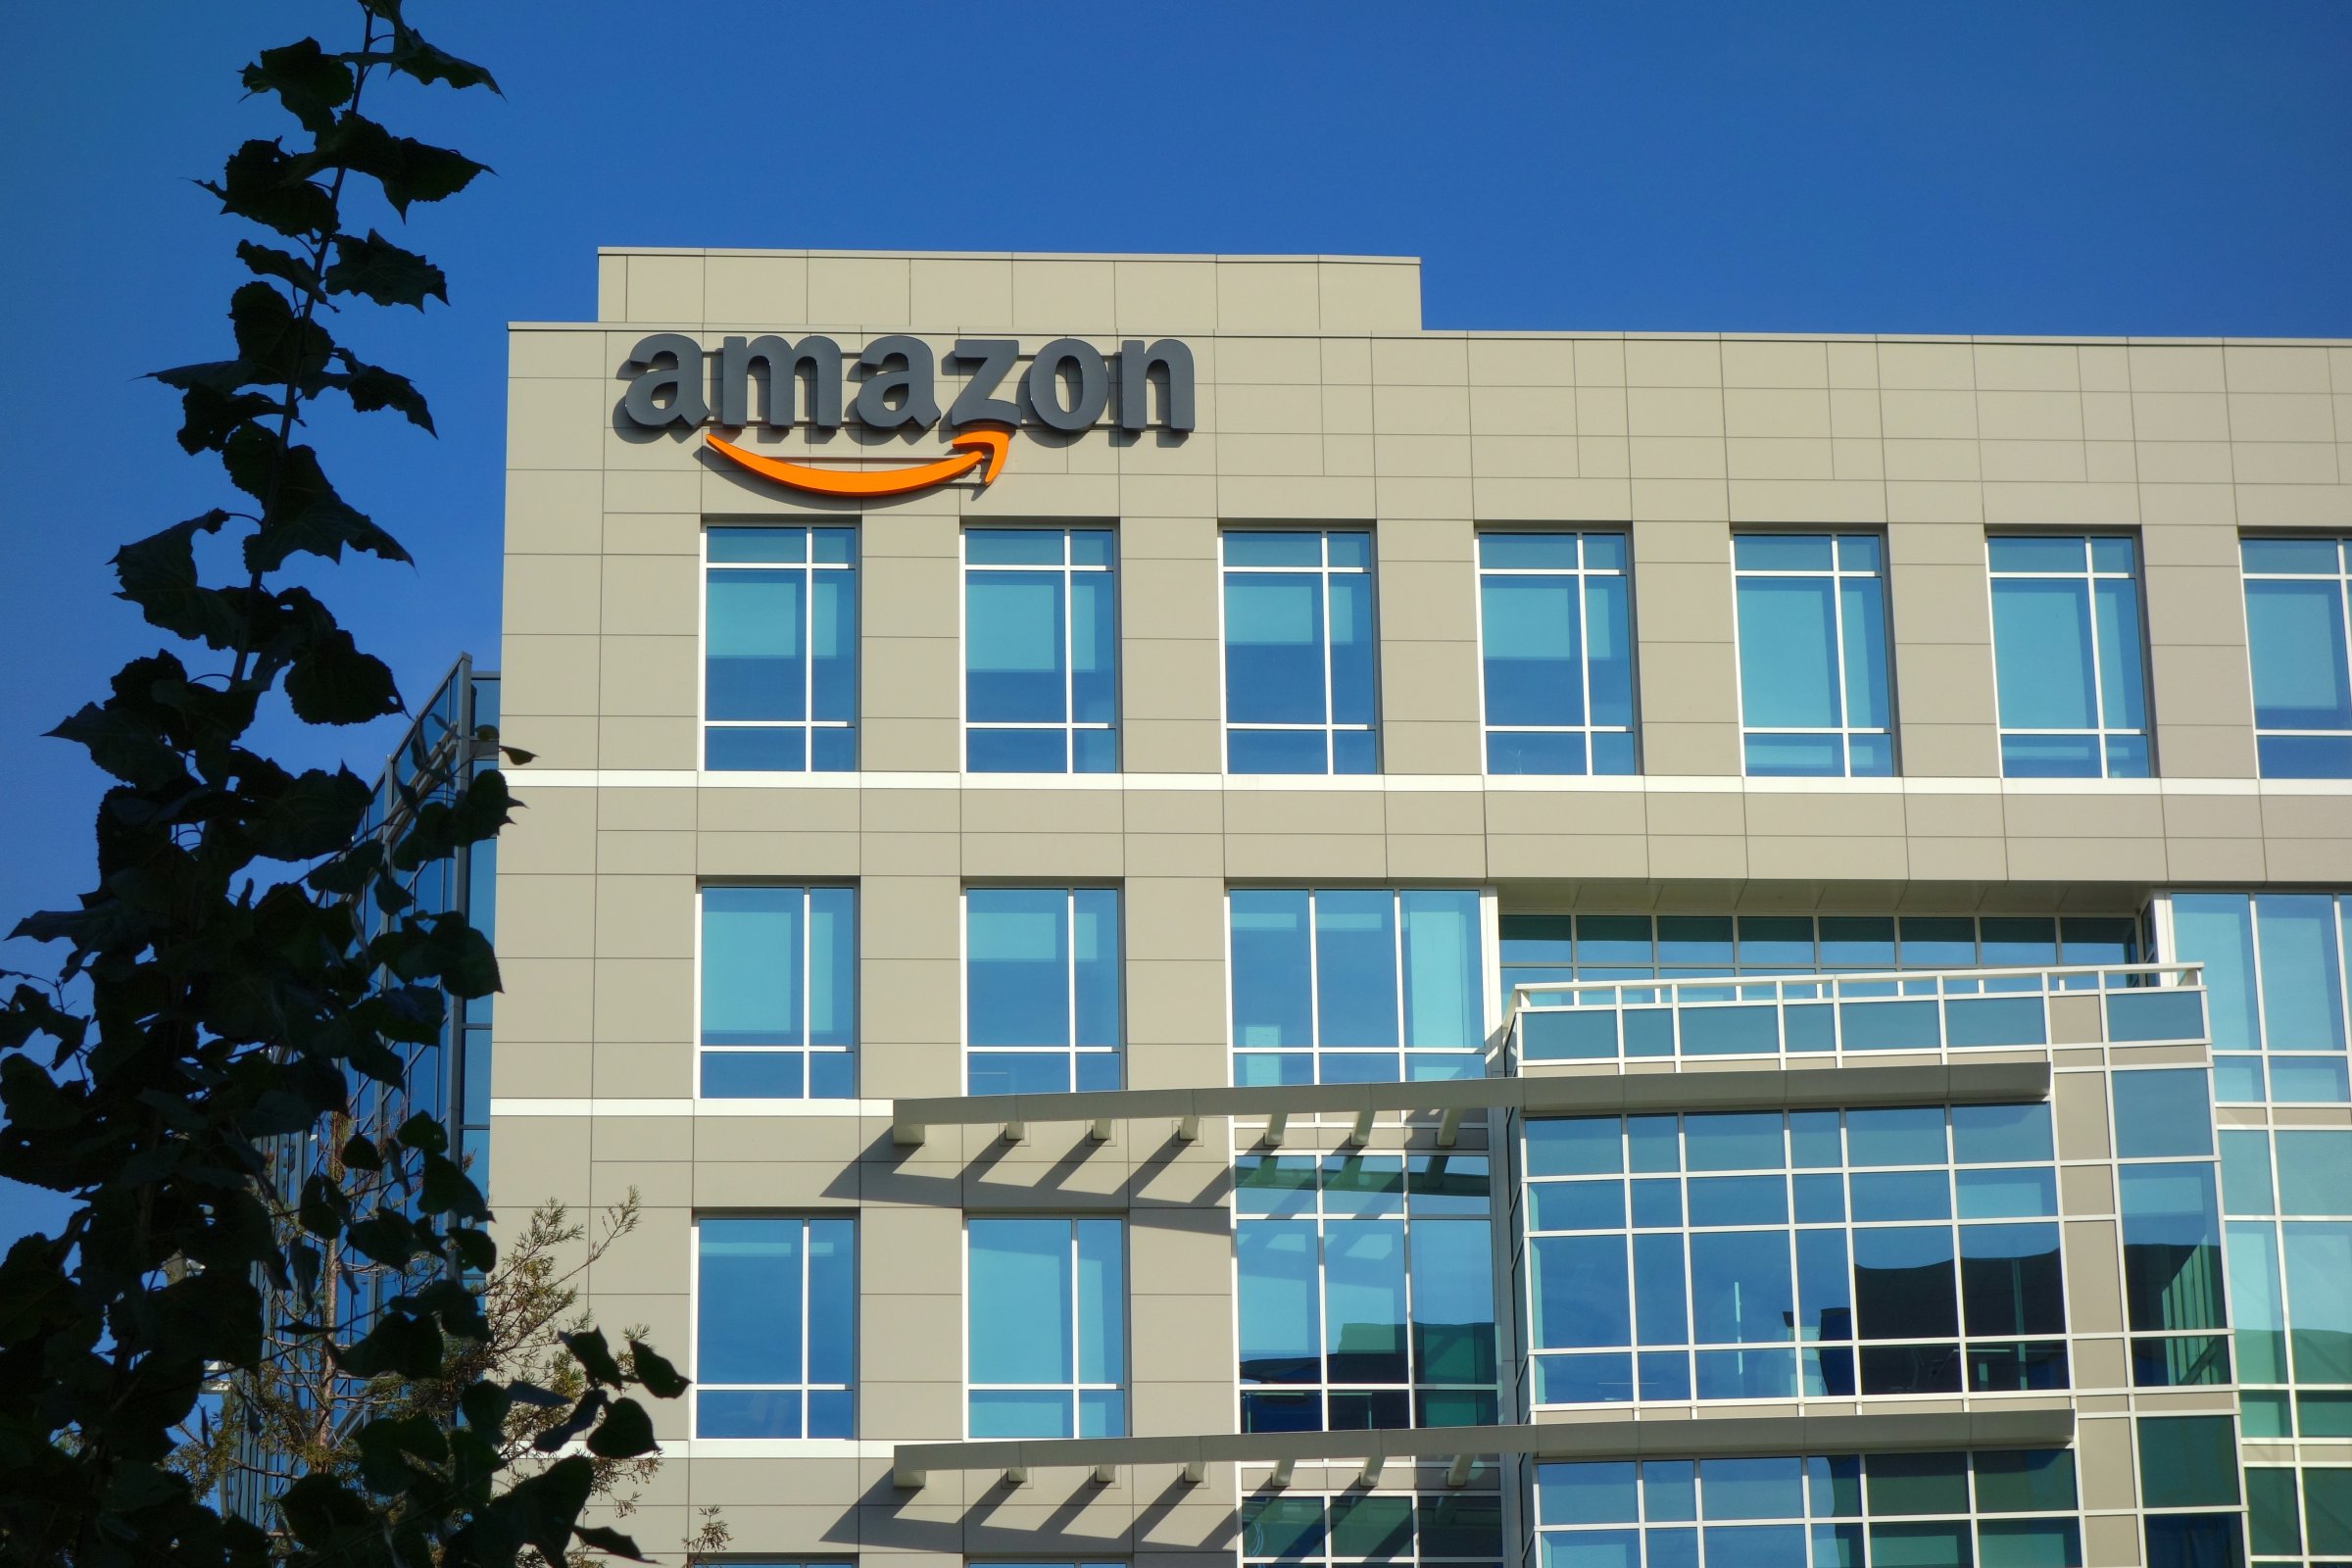 Amazon corporate office building in Sunnyvale, California.